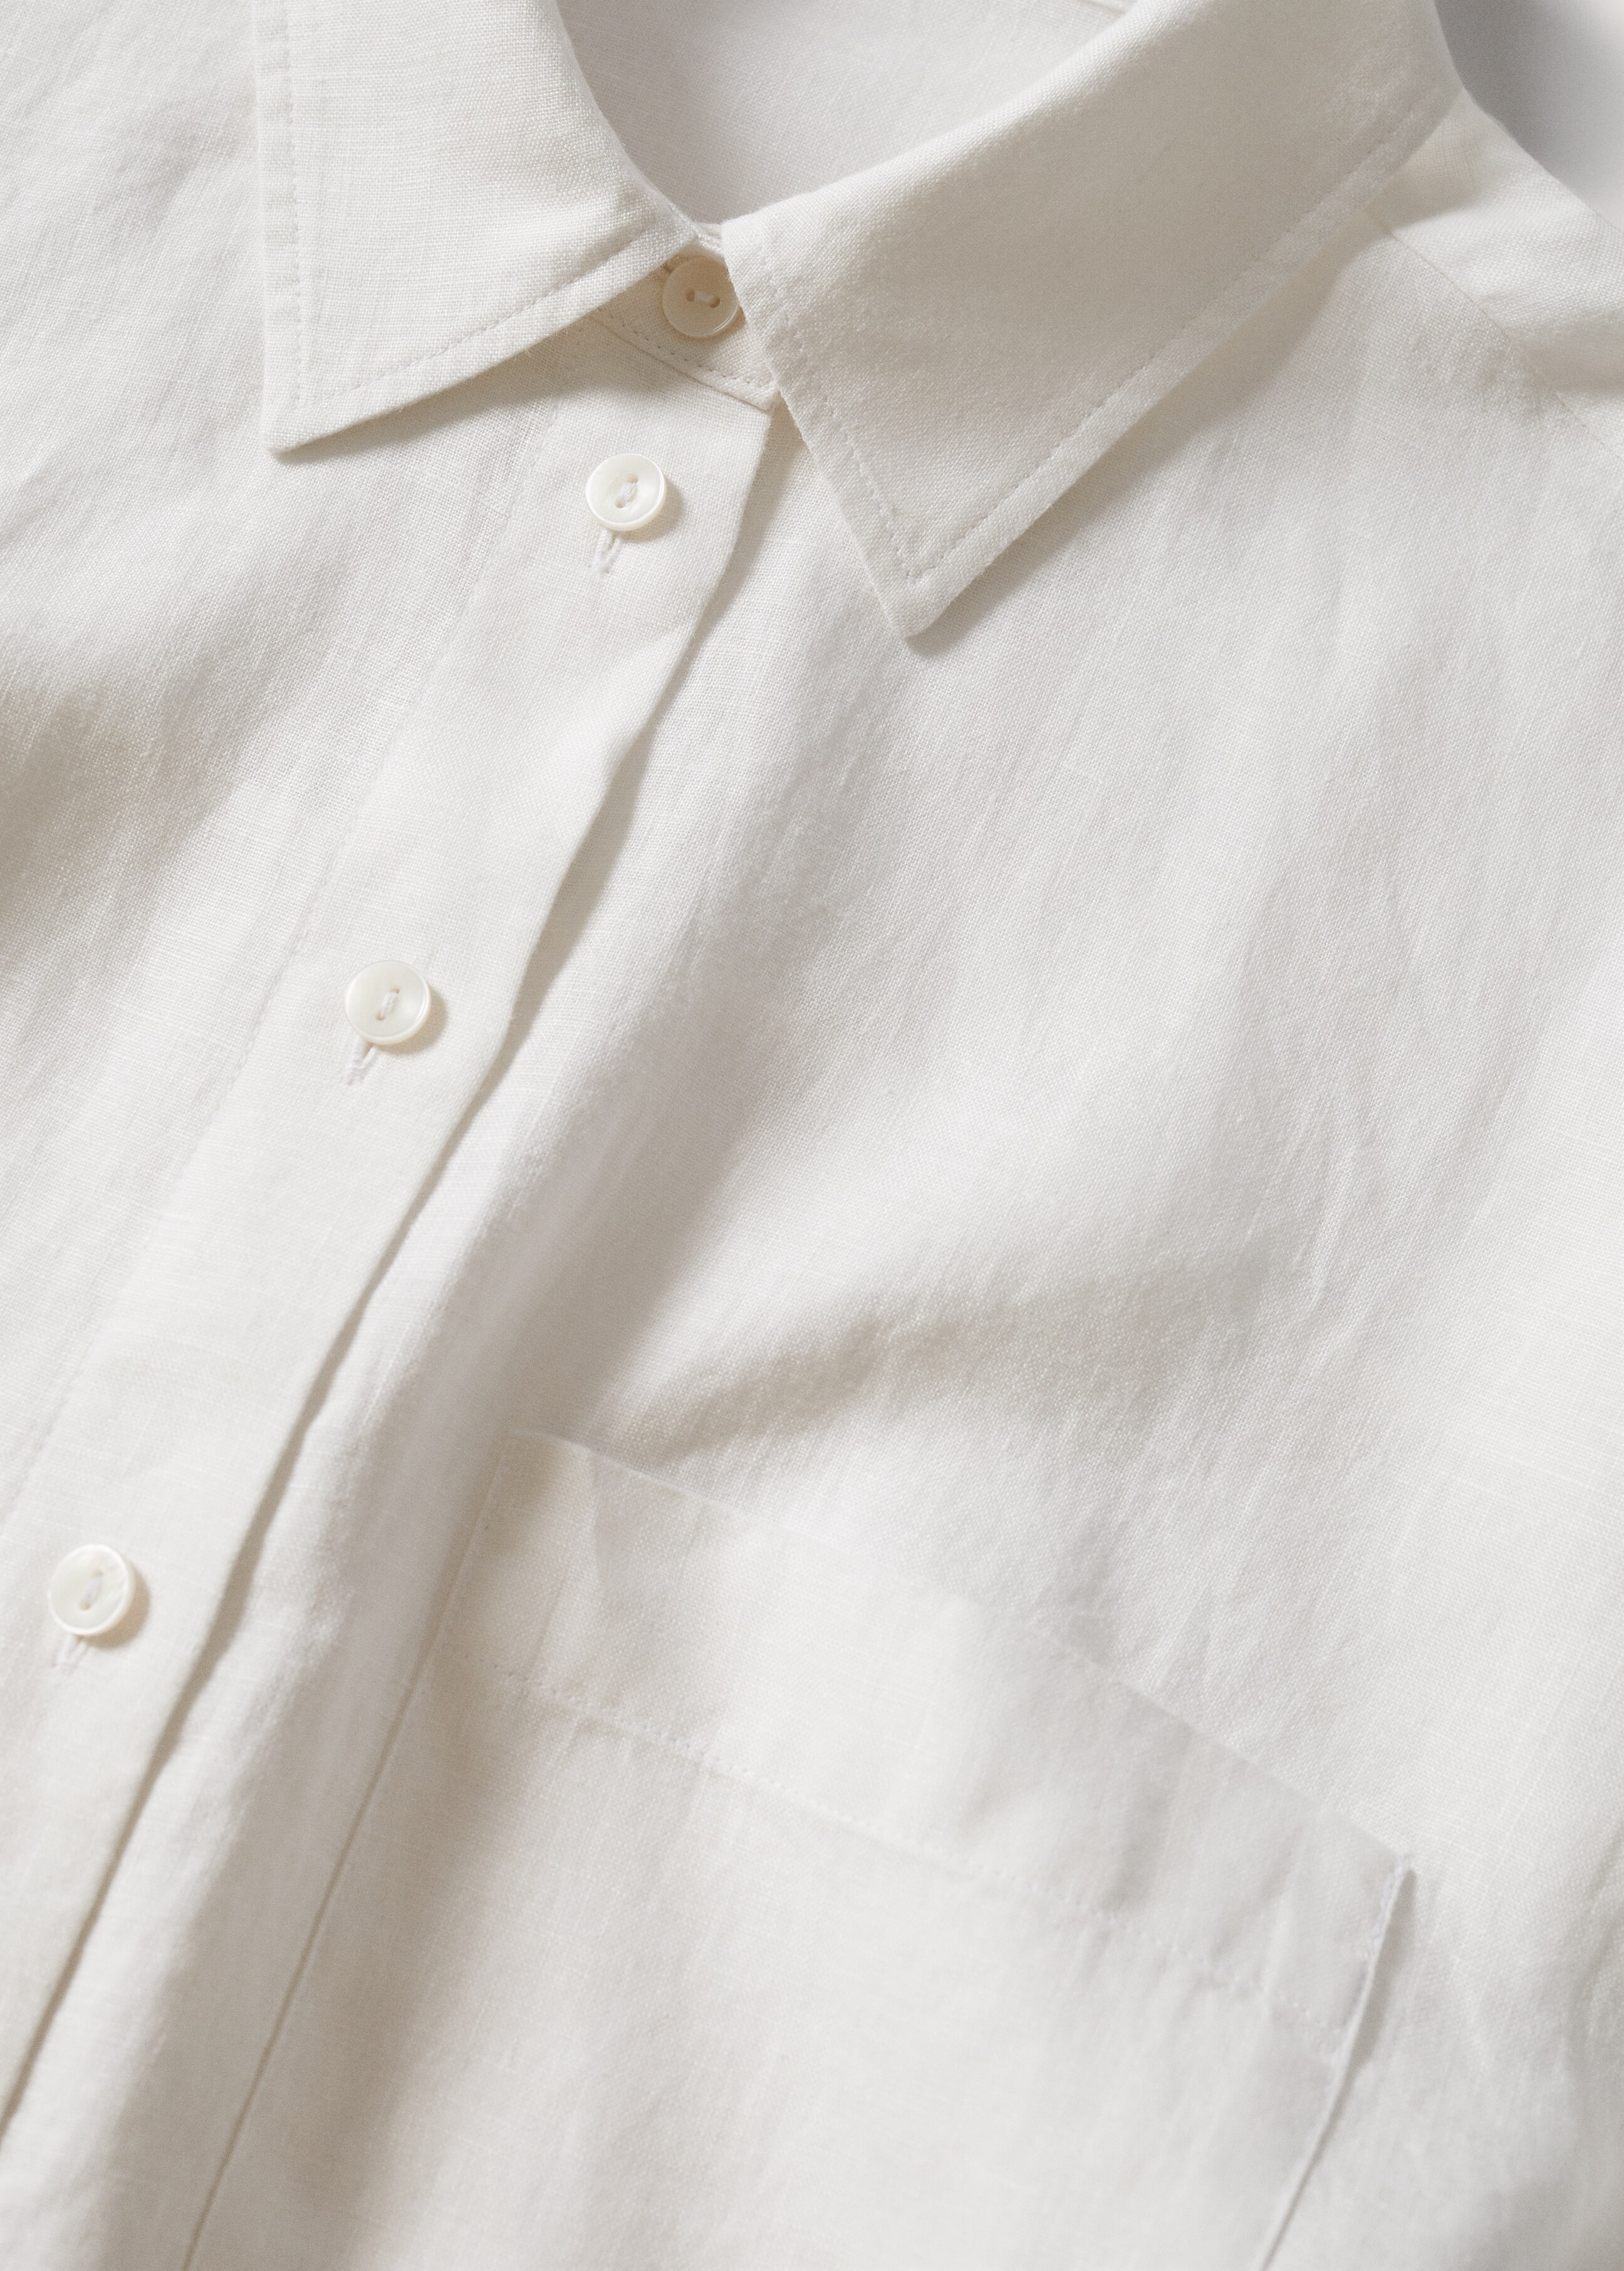 Linen 100% shirt - Details of the article 8